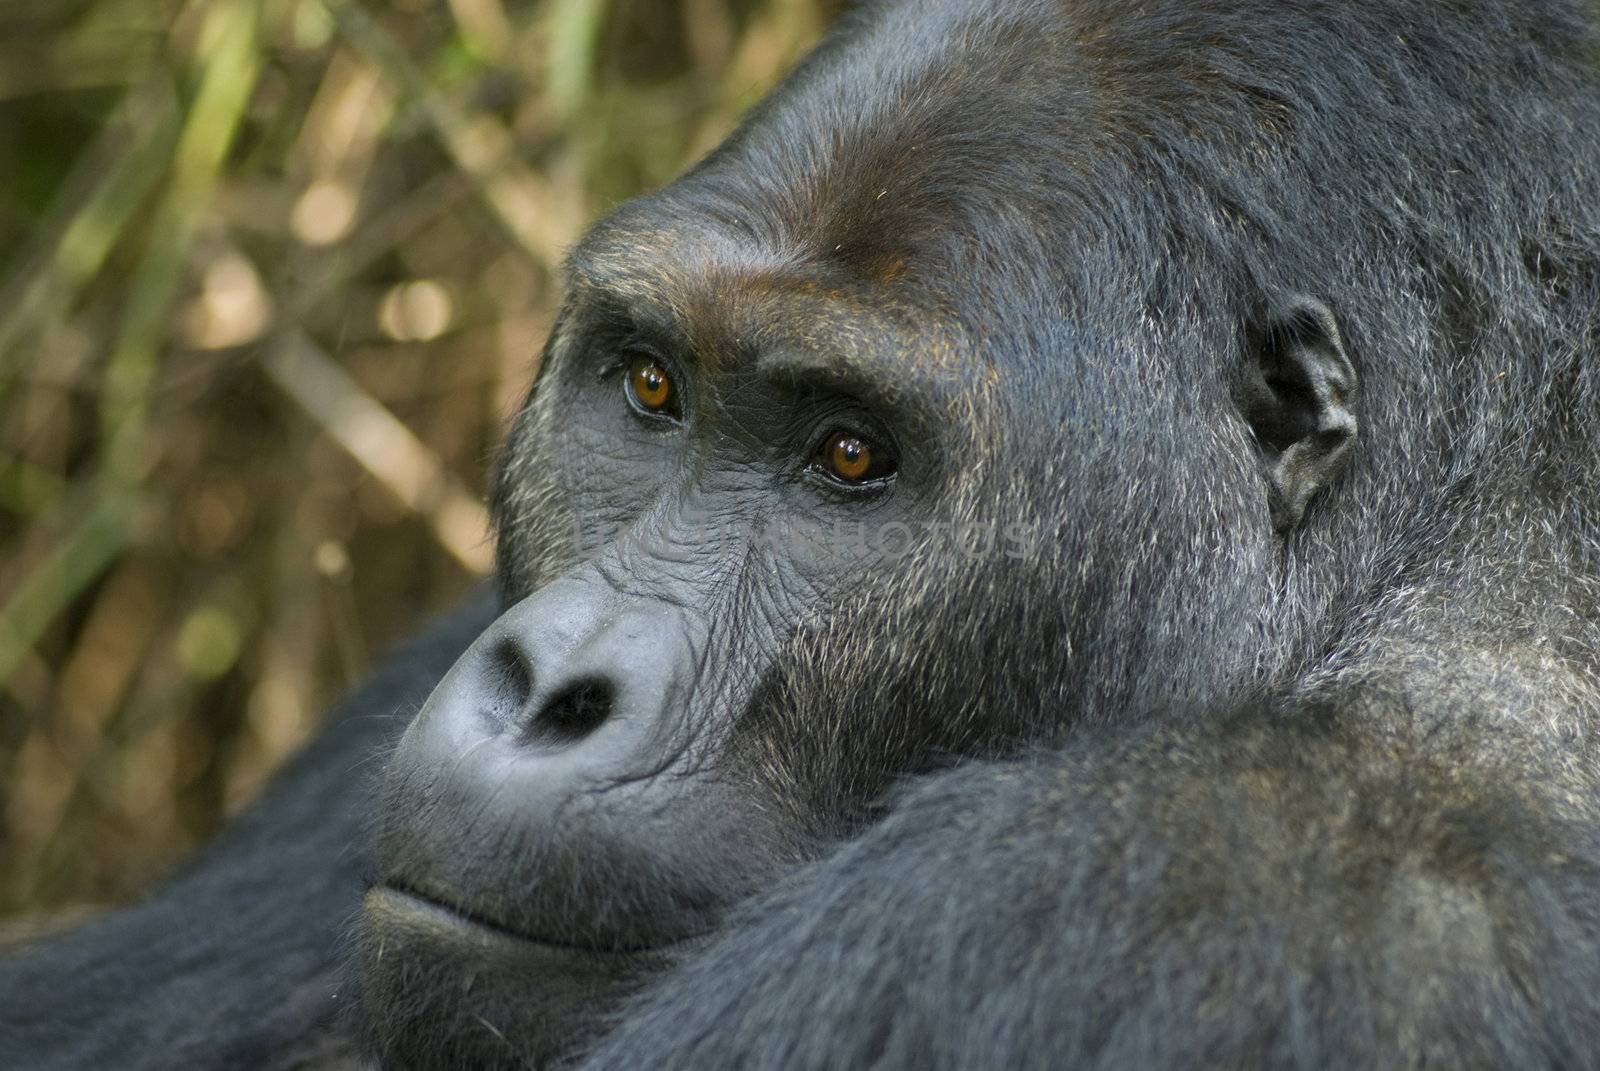 Portrait of an Eastern Lowland Gorilla in Wildlife by stockbymh